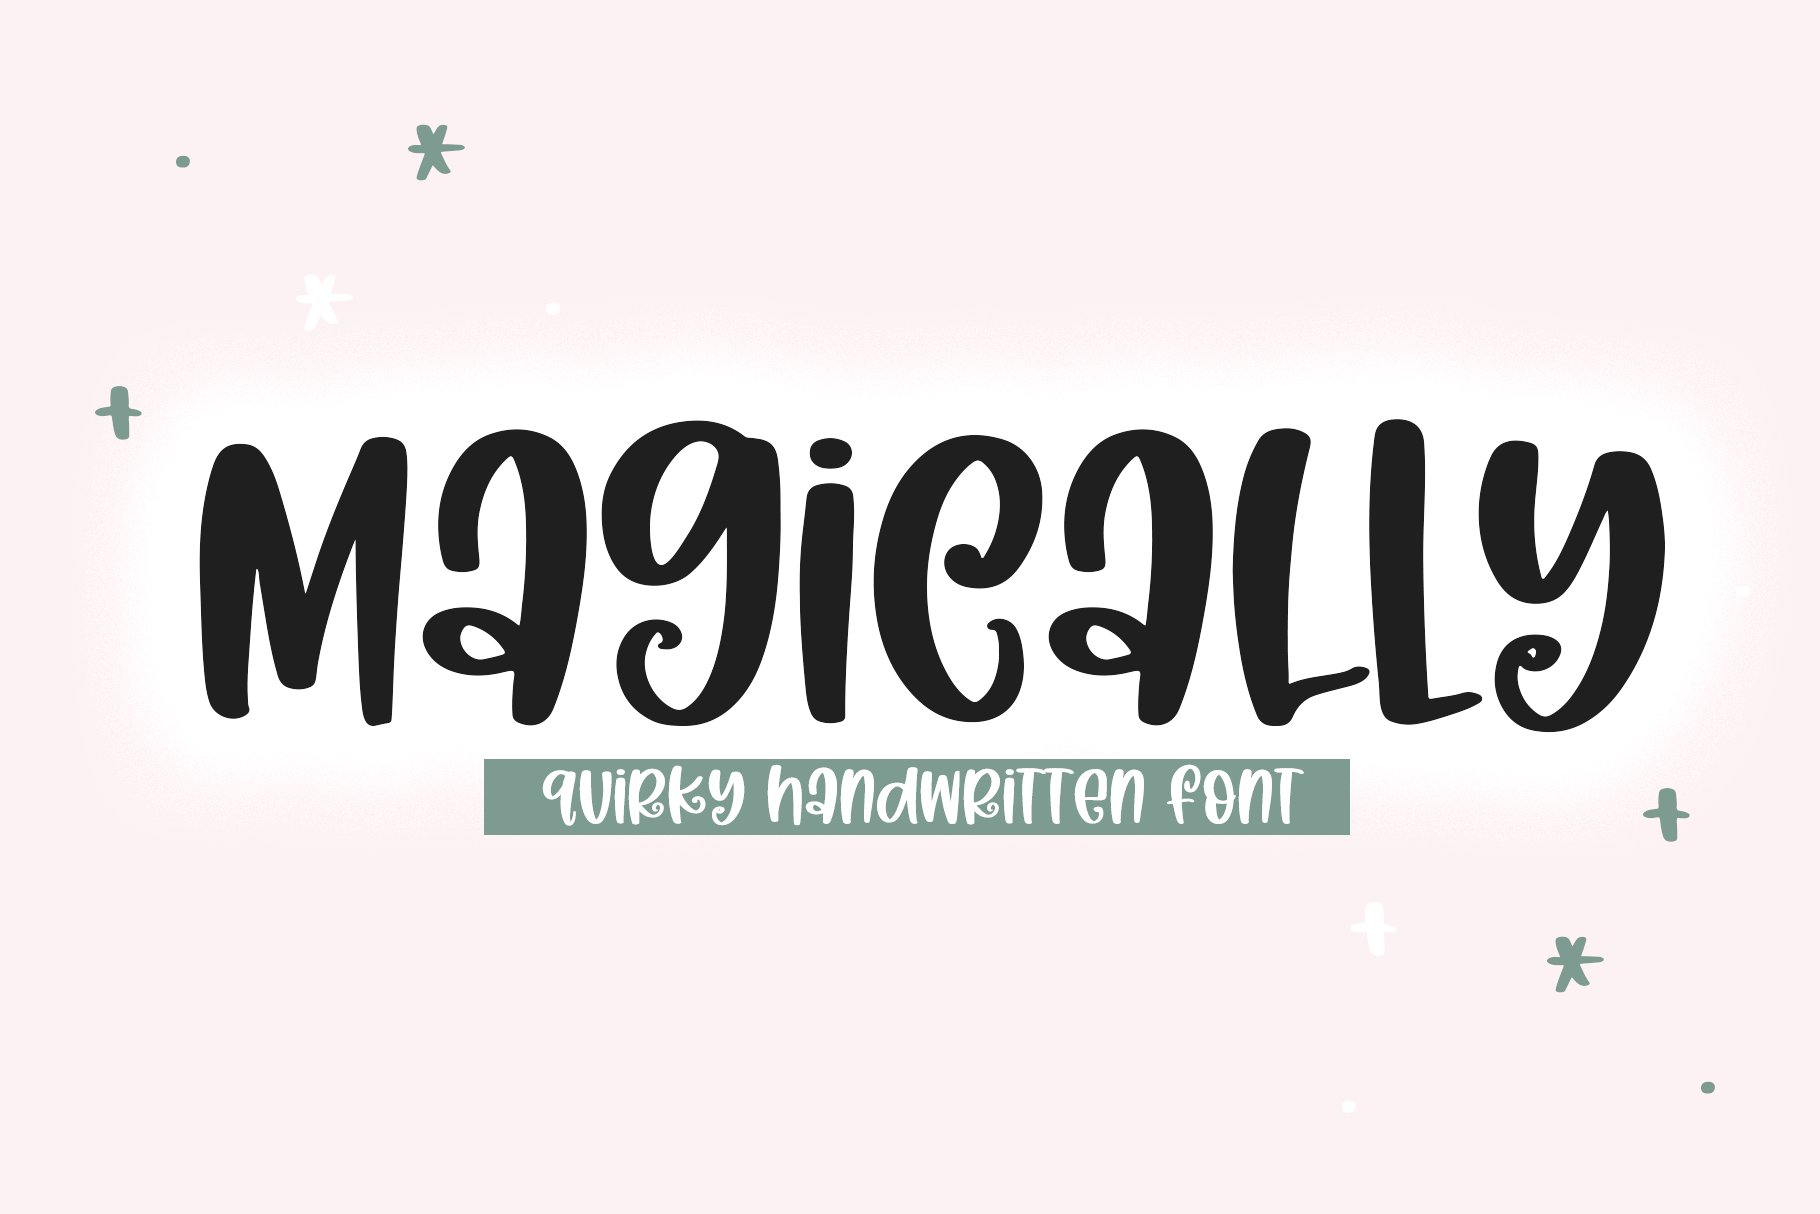 Magically | Fun Handwritten Font cover image.